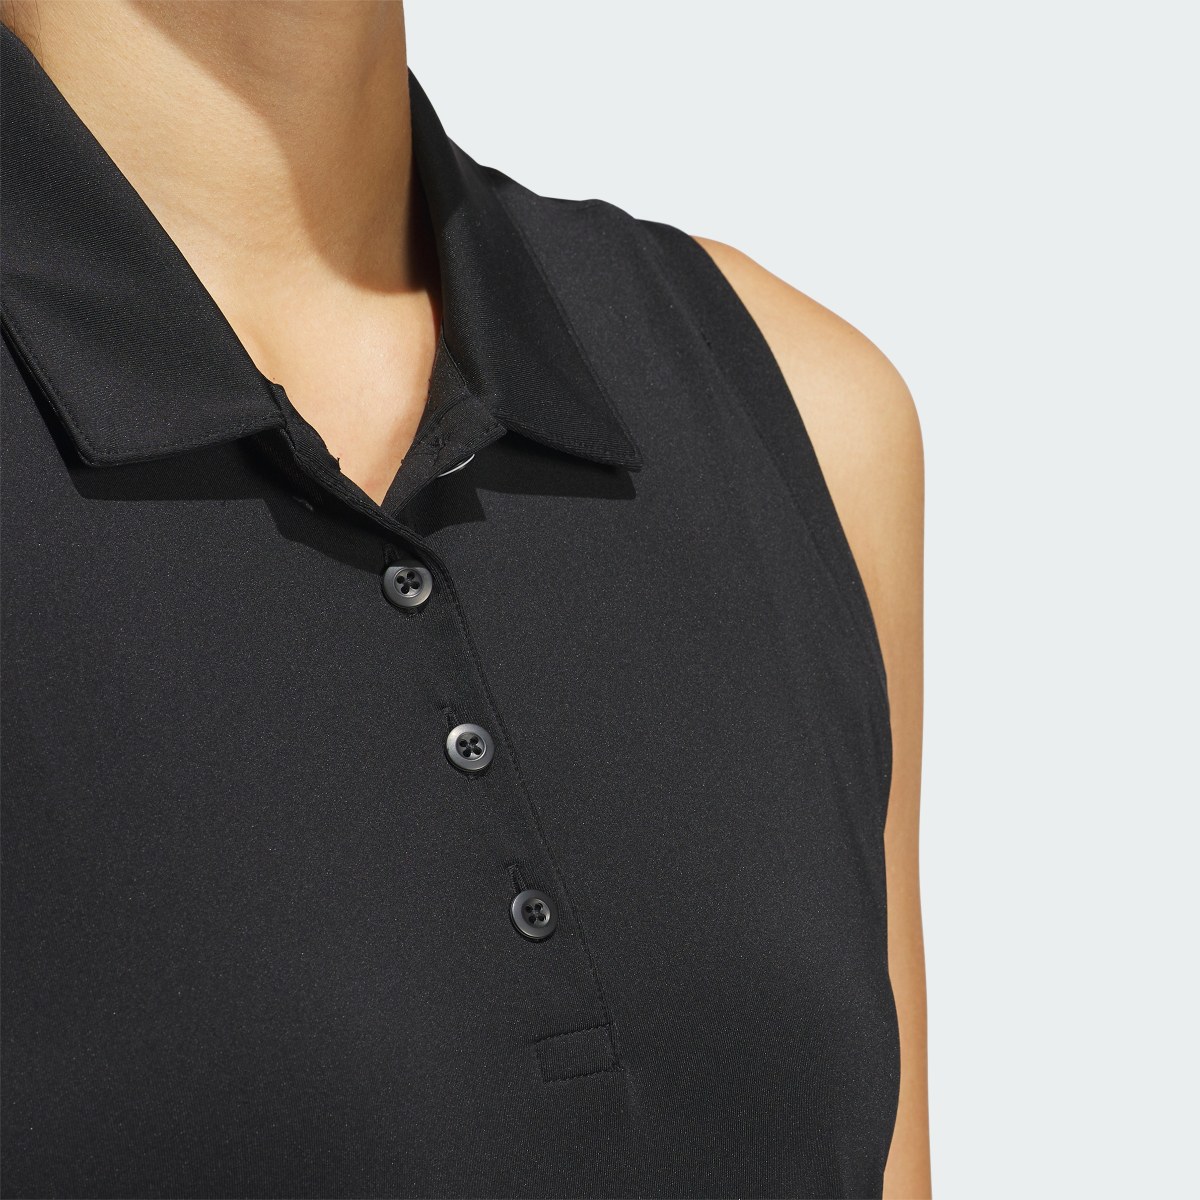 Adidas Women's Ultimate365 Solid Sleeveless Poloshirt. 6